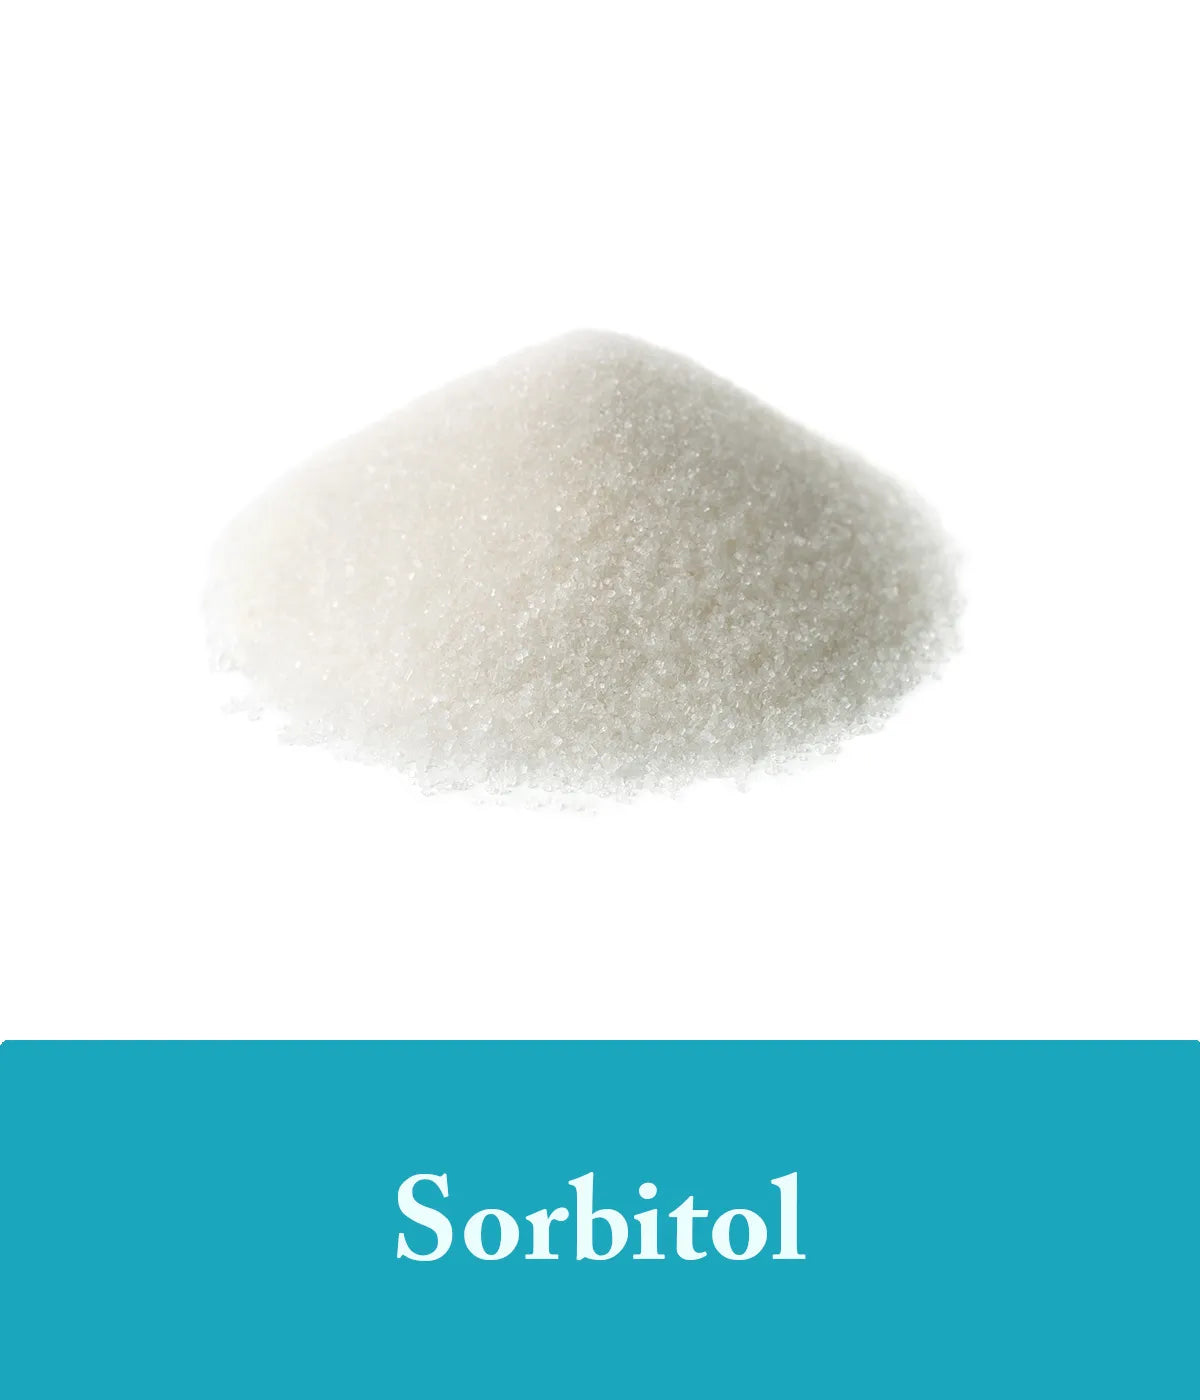 Sorbitol Ingredient For Sea Salt Soap